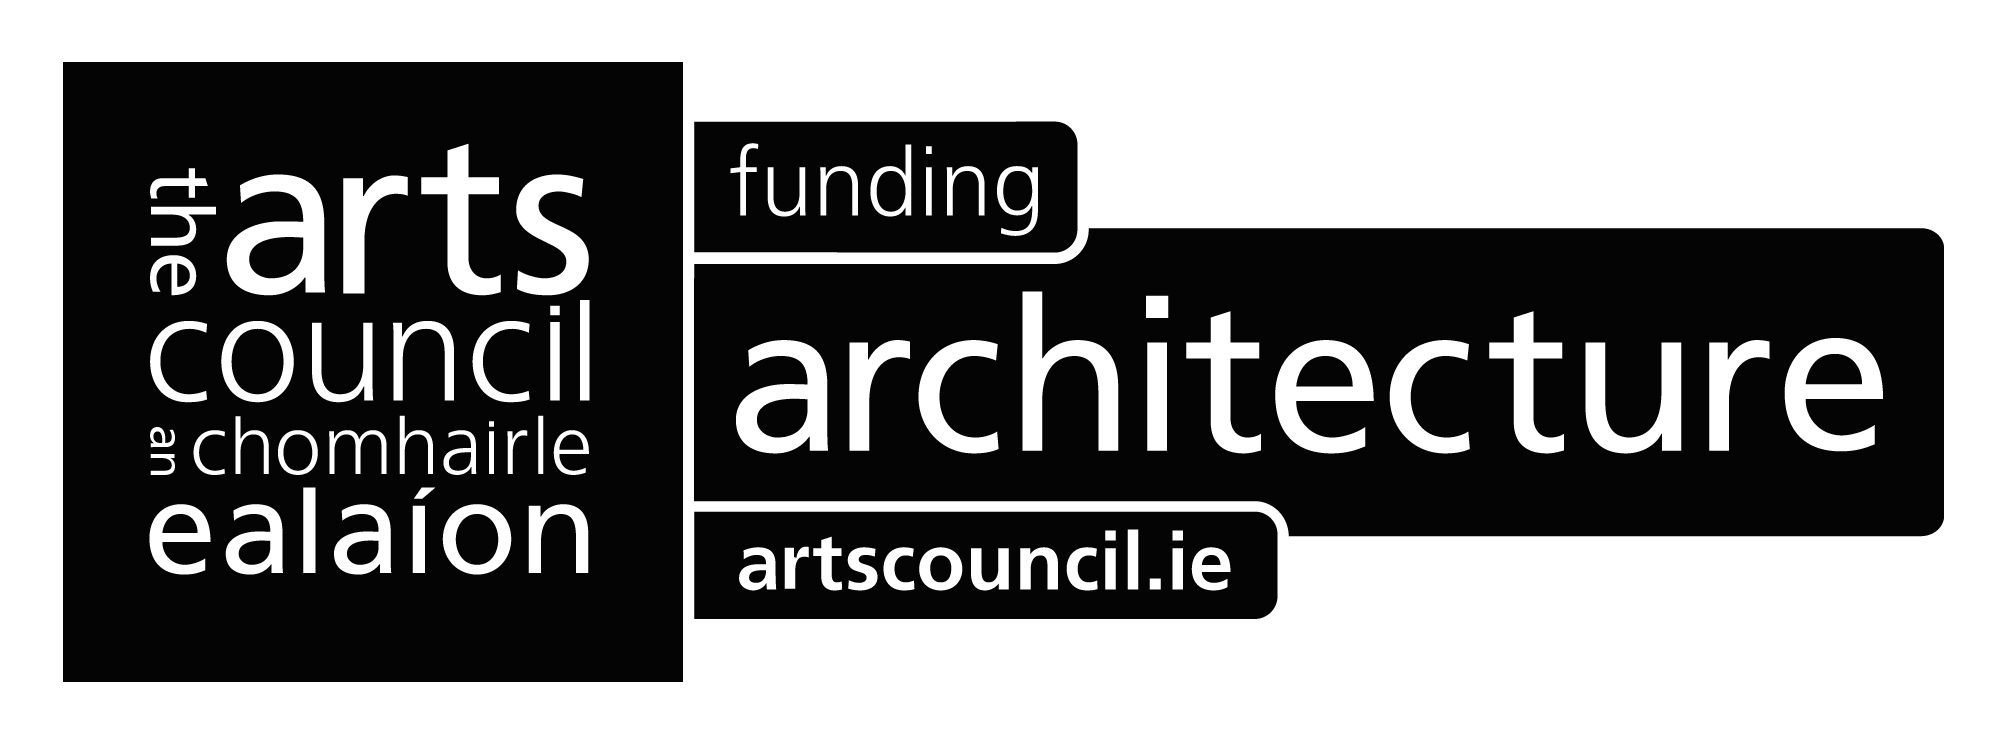 arts council funding logo